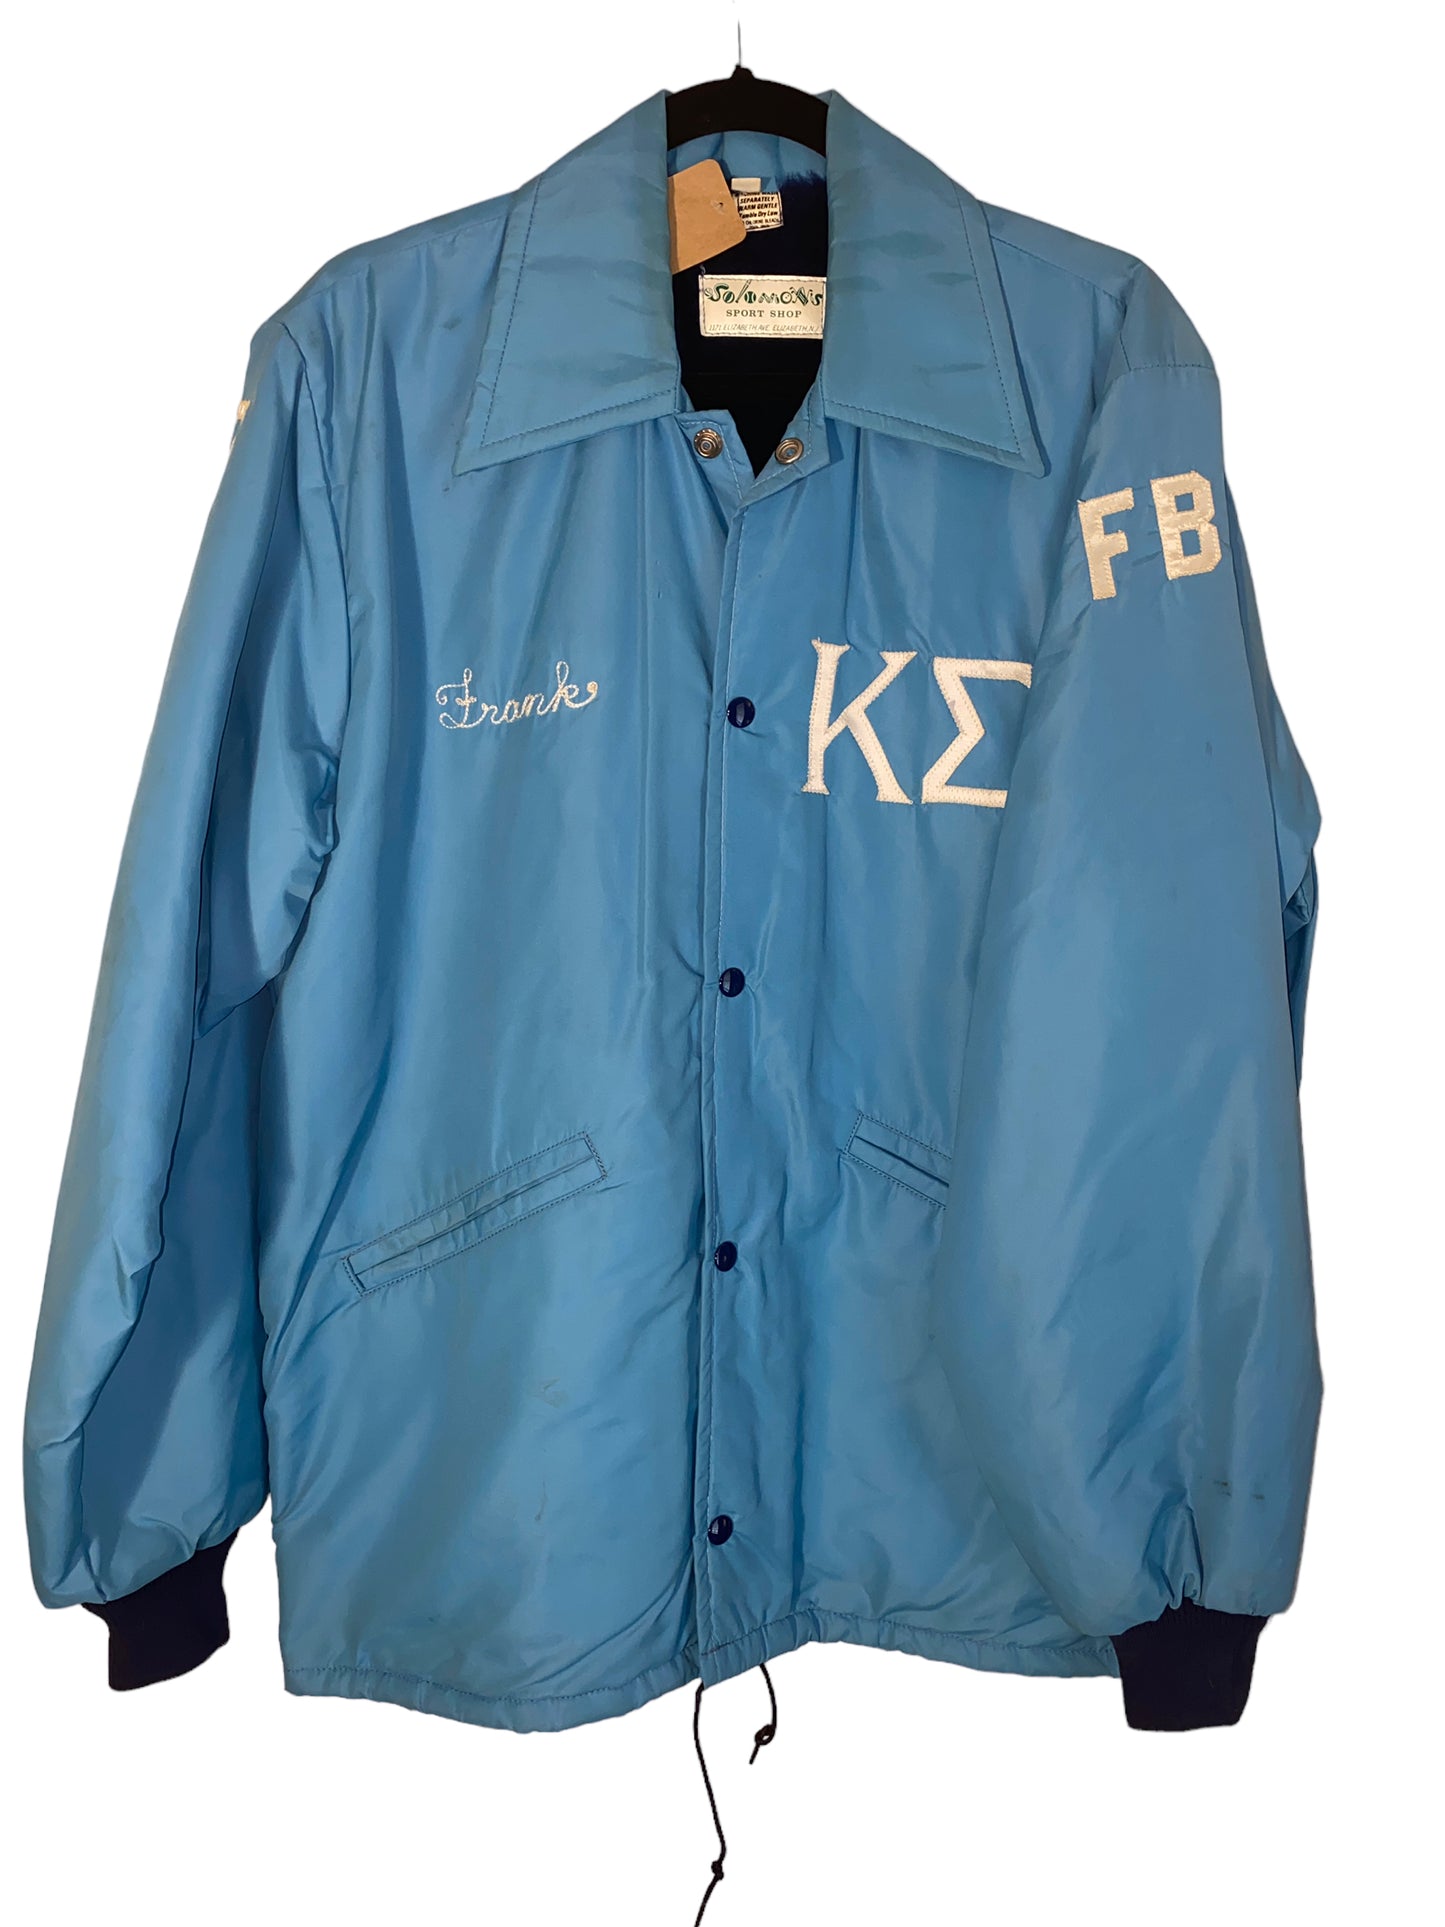 Vintage Saint Peters College Jacket 1970s Football Champs Kappa Sigma